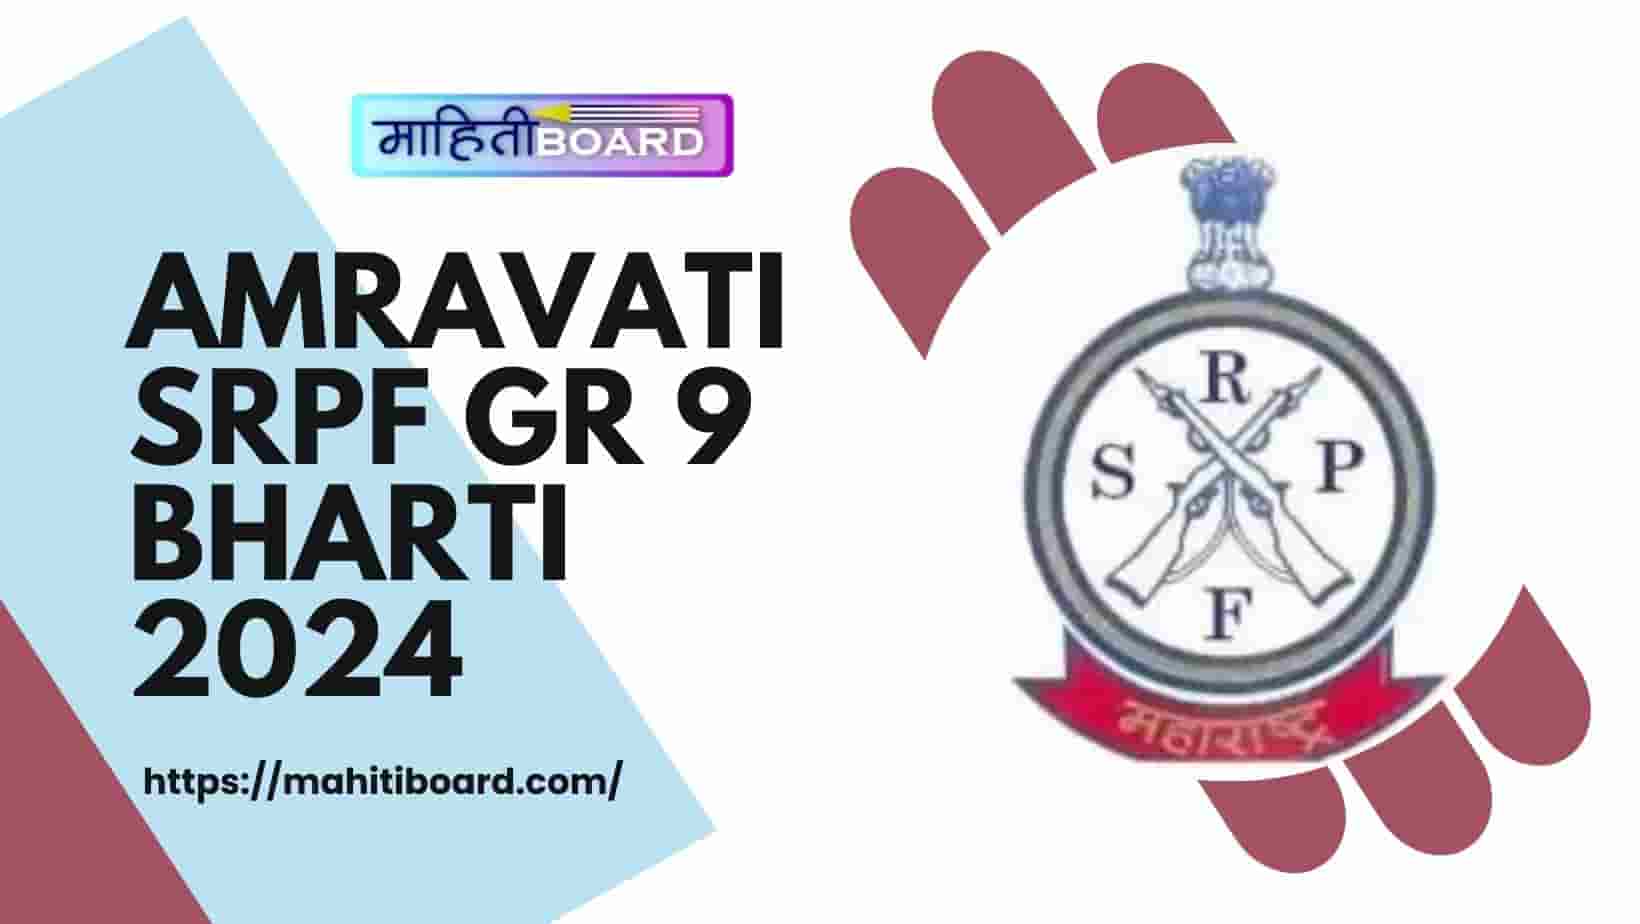 Amravati SRPF GR 9 Bharti 2024